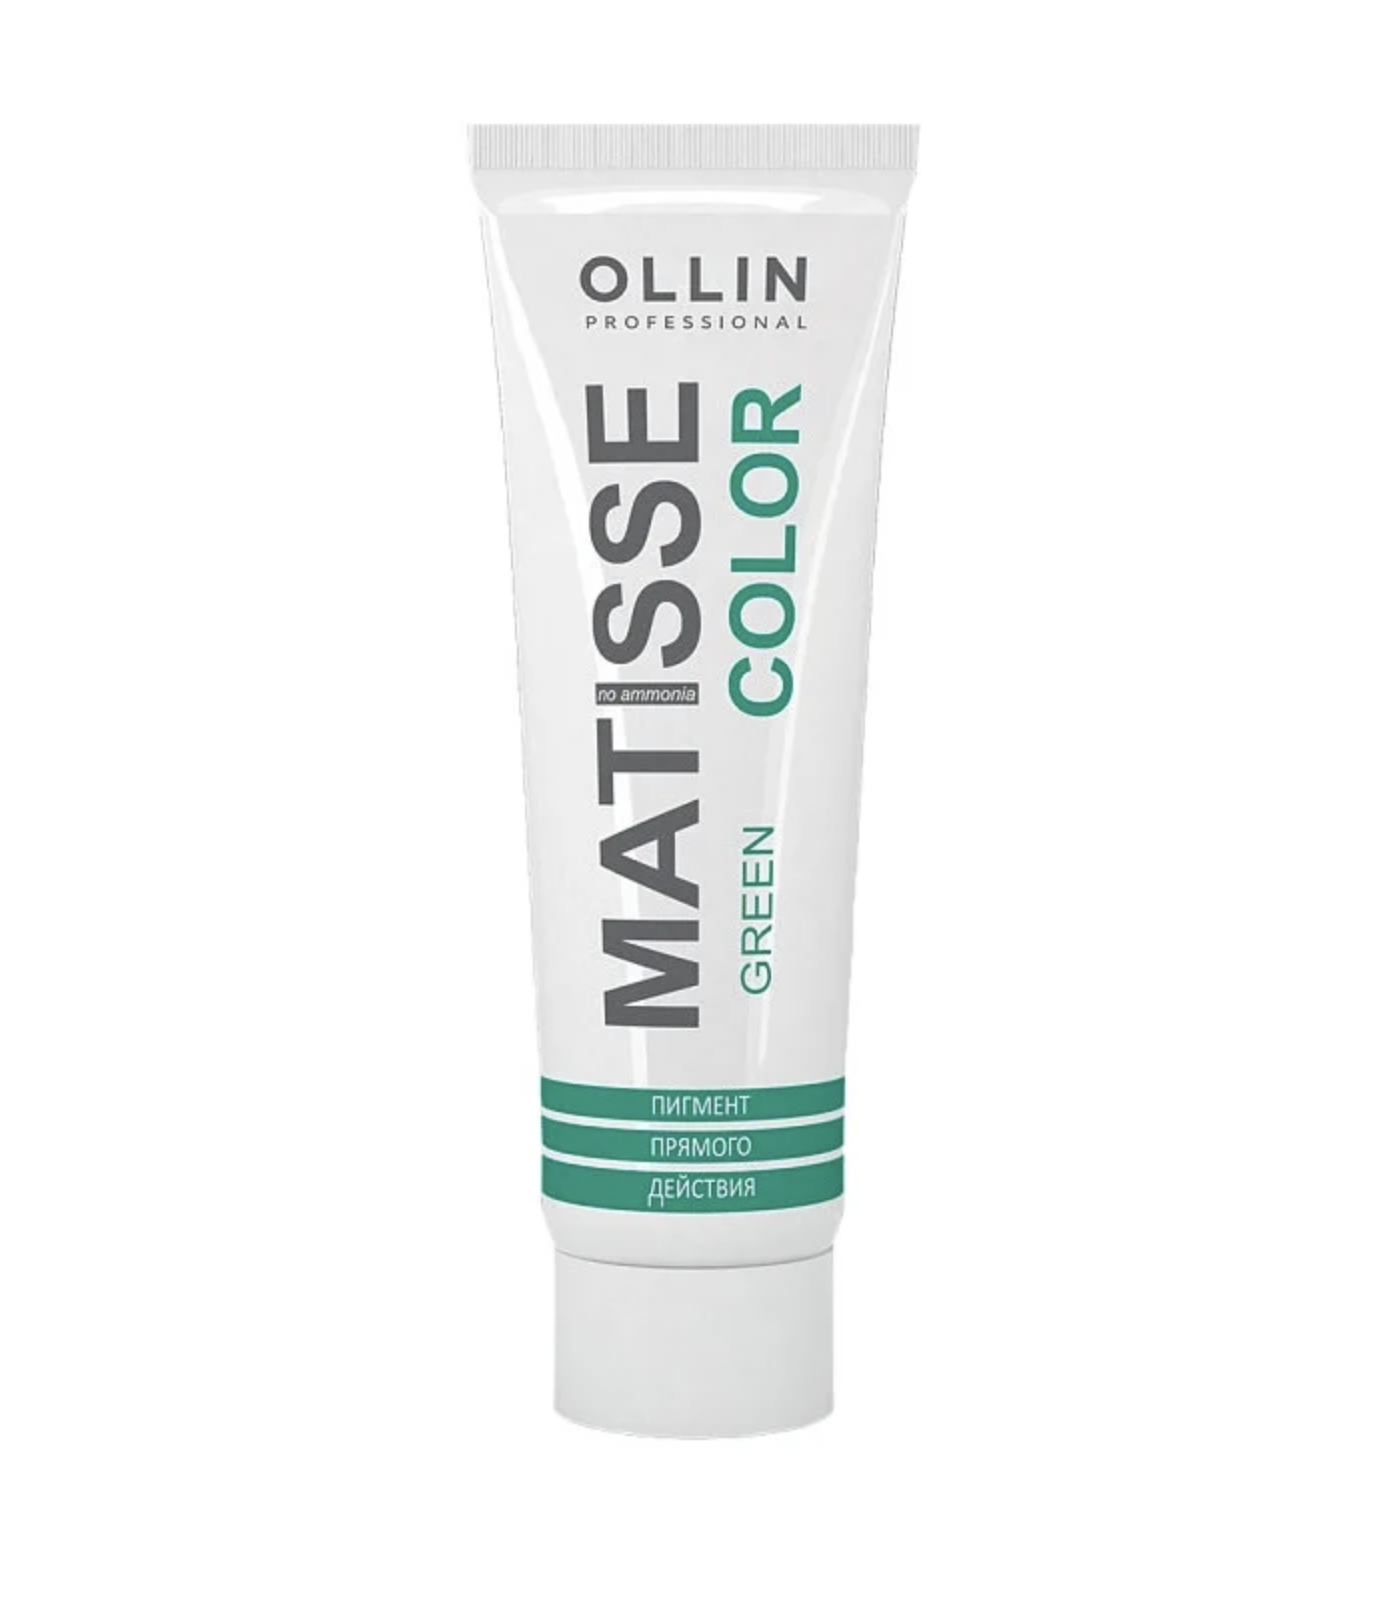   / Ollin Professional -      Matisse Green  100 